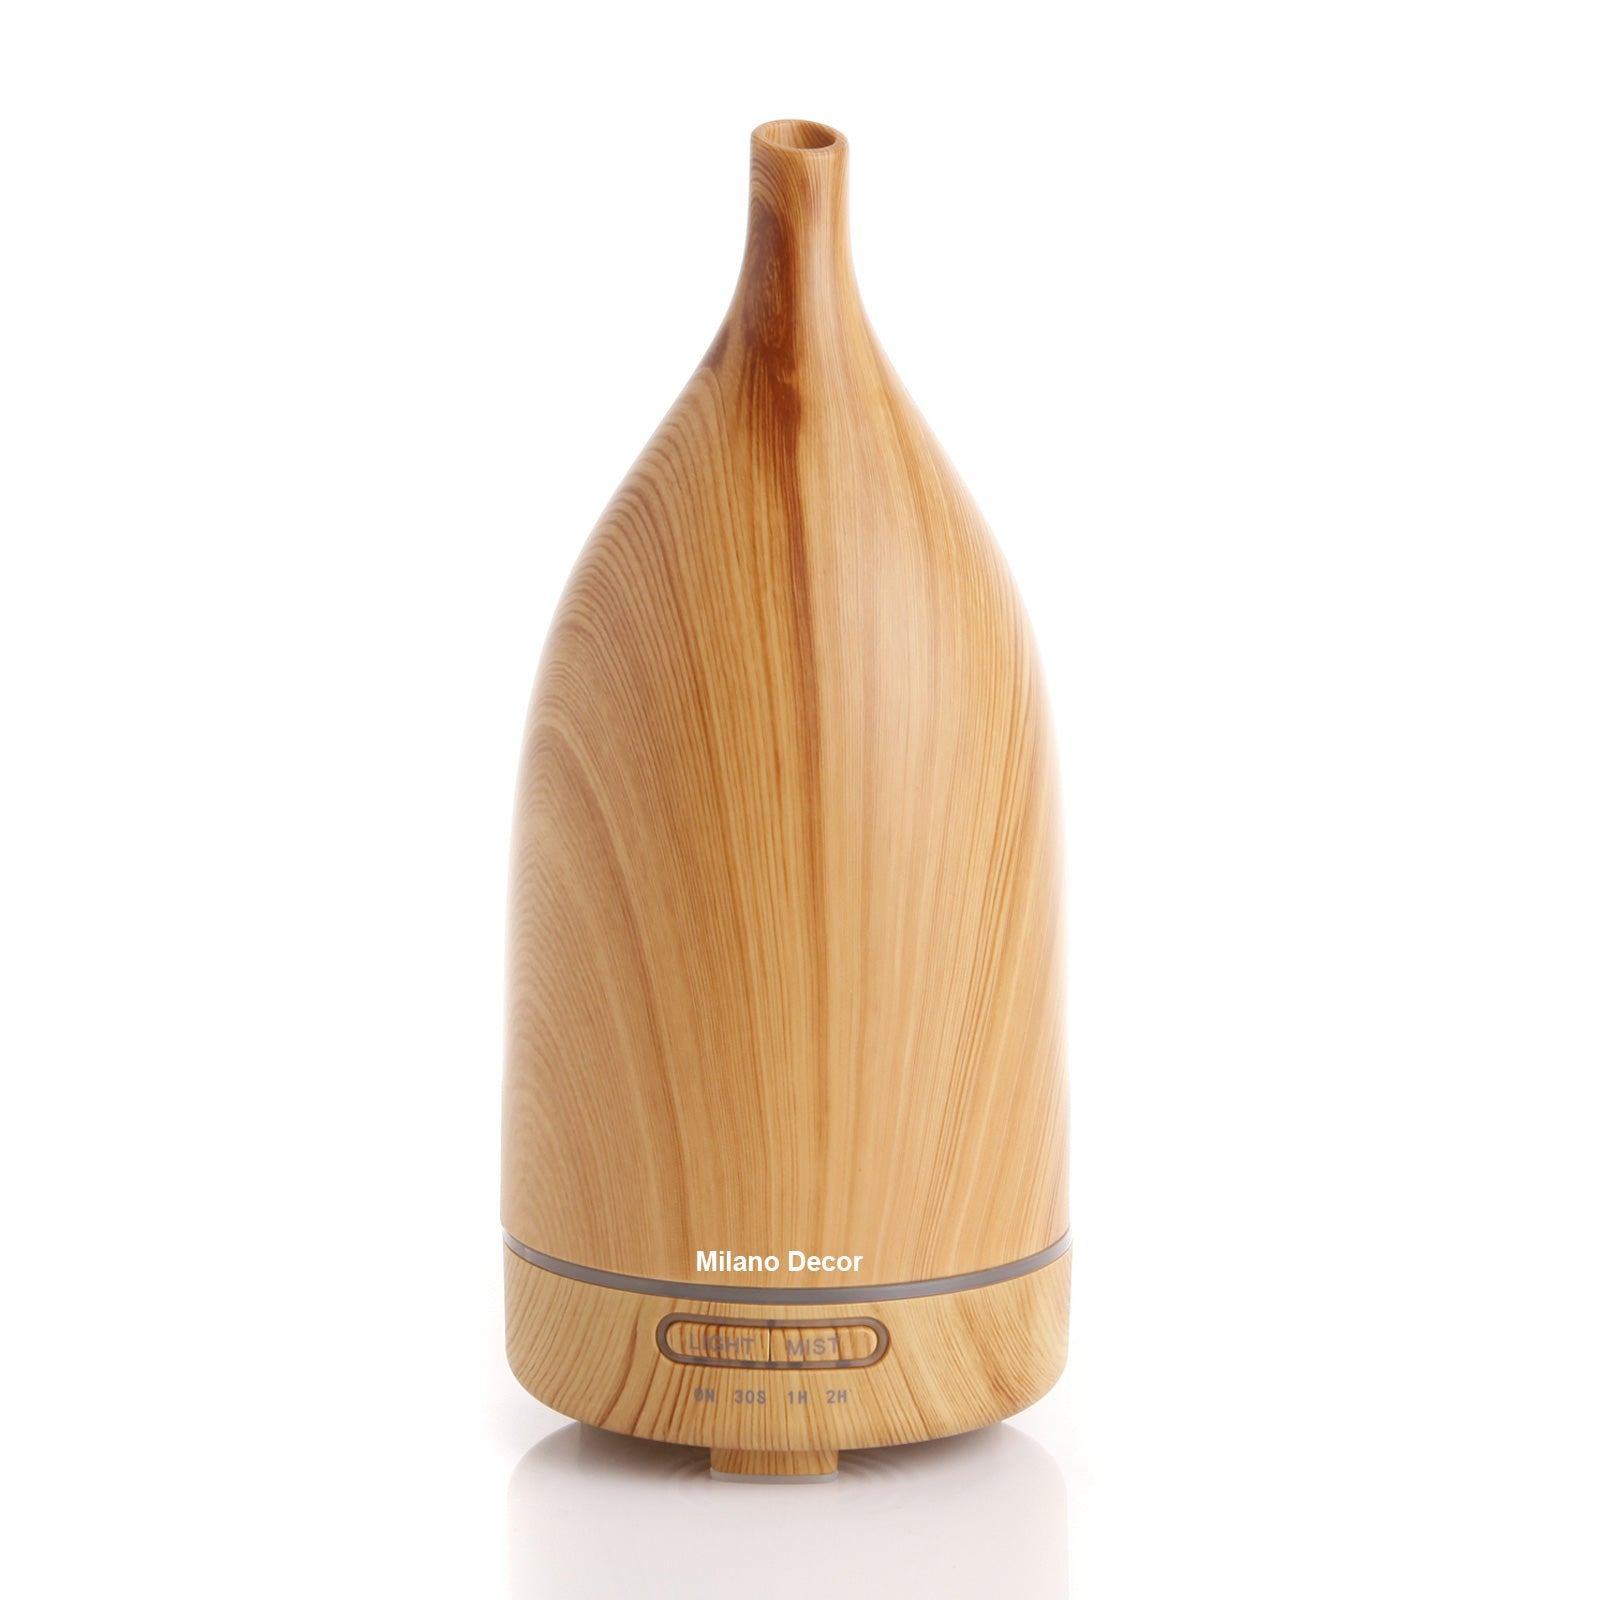 Milano Decor Aroma Diffuser 100ml Ultrasonic Humidifier Purifier And 3 Pack Oils Light Wood - AULASH